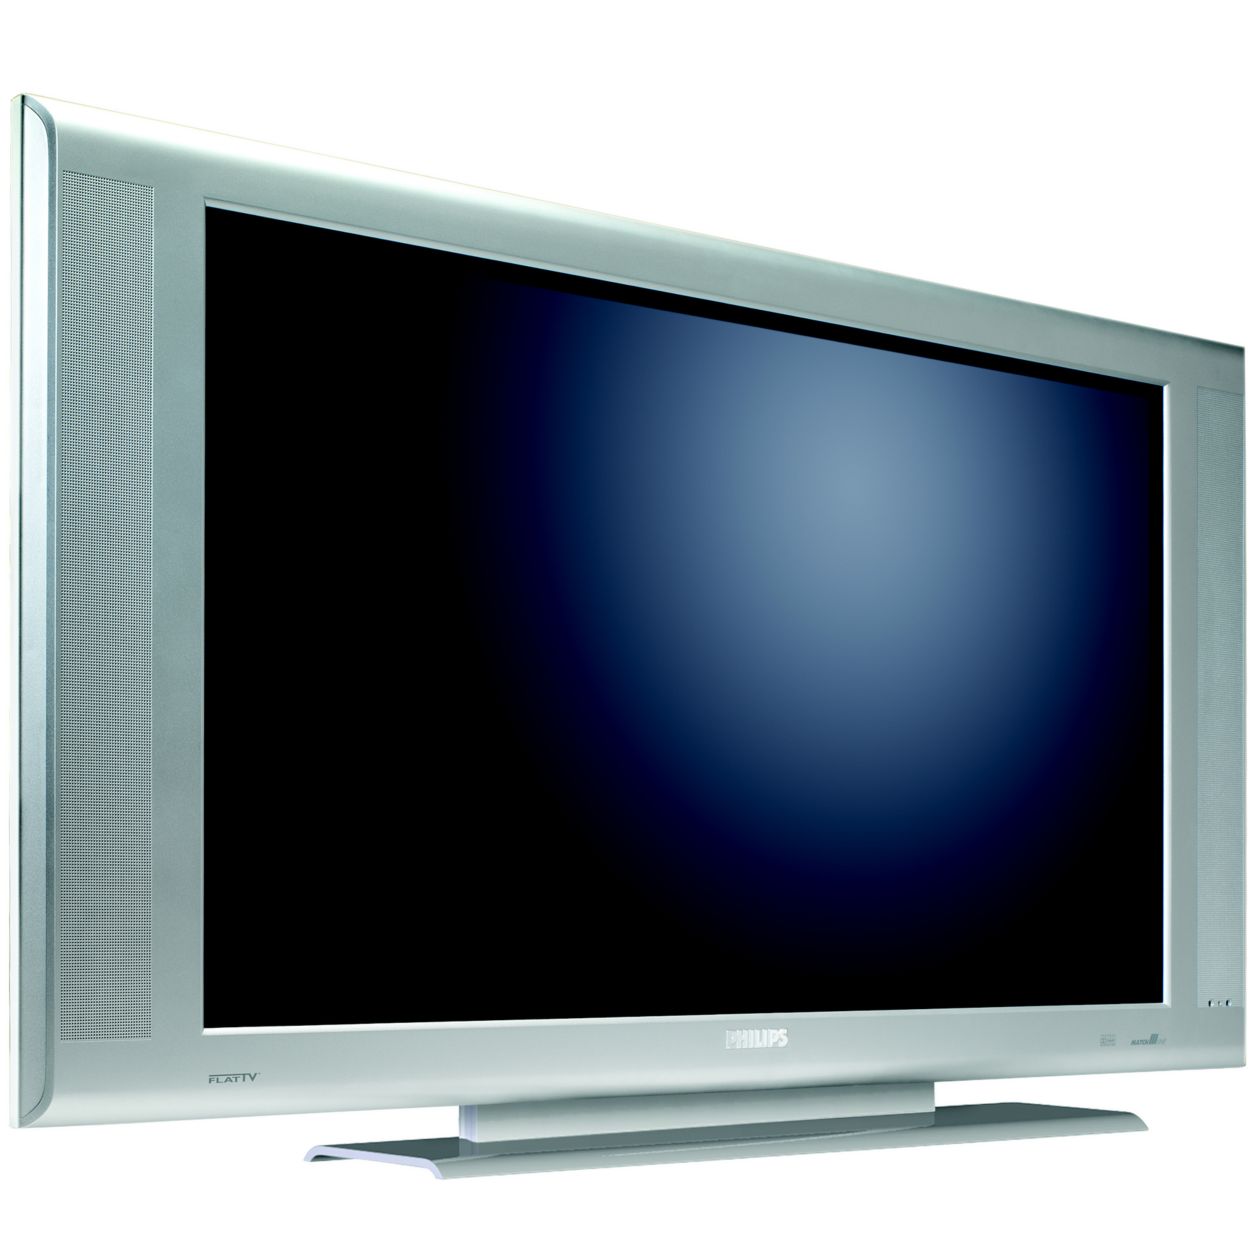 Первые плоские телевизоры. Телевизор Филипс Flat TV 42 плазма. Телевизор Philips 37pf9946 37". Philips 42hf9442. Philips 42 плазма.